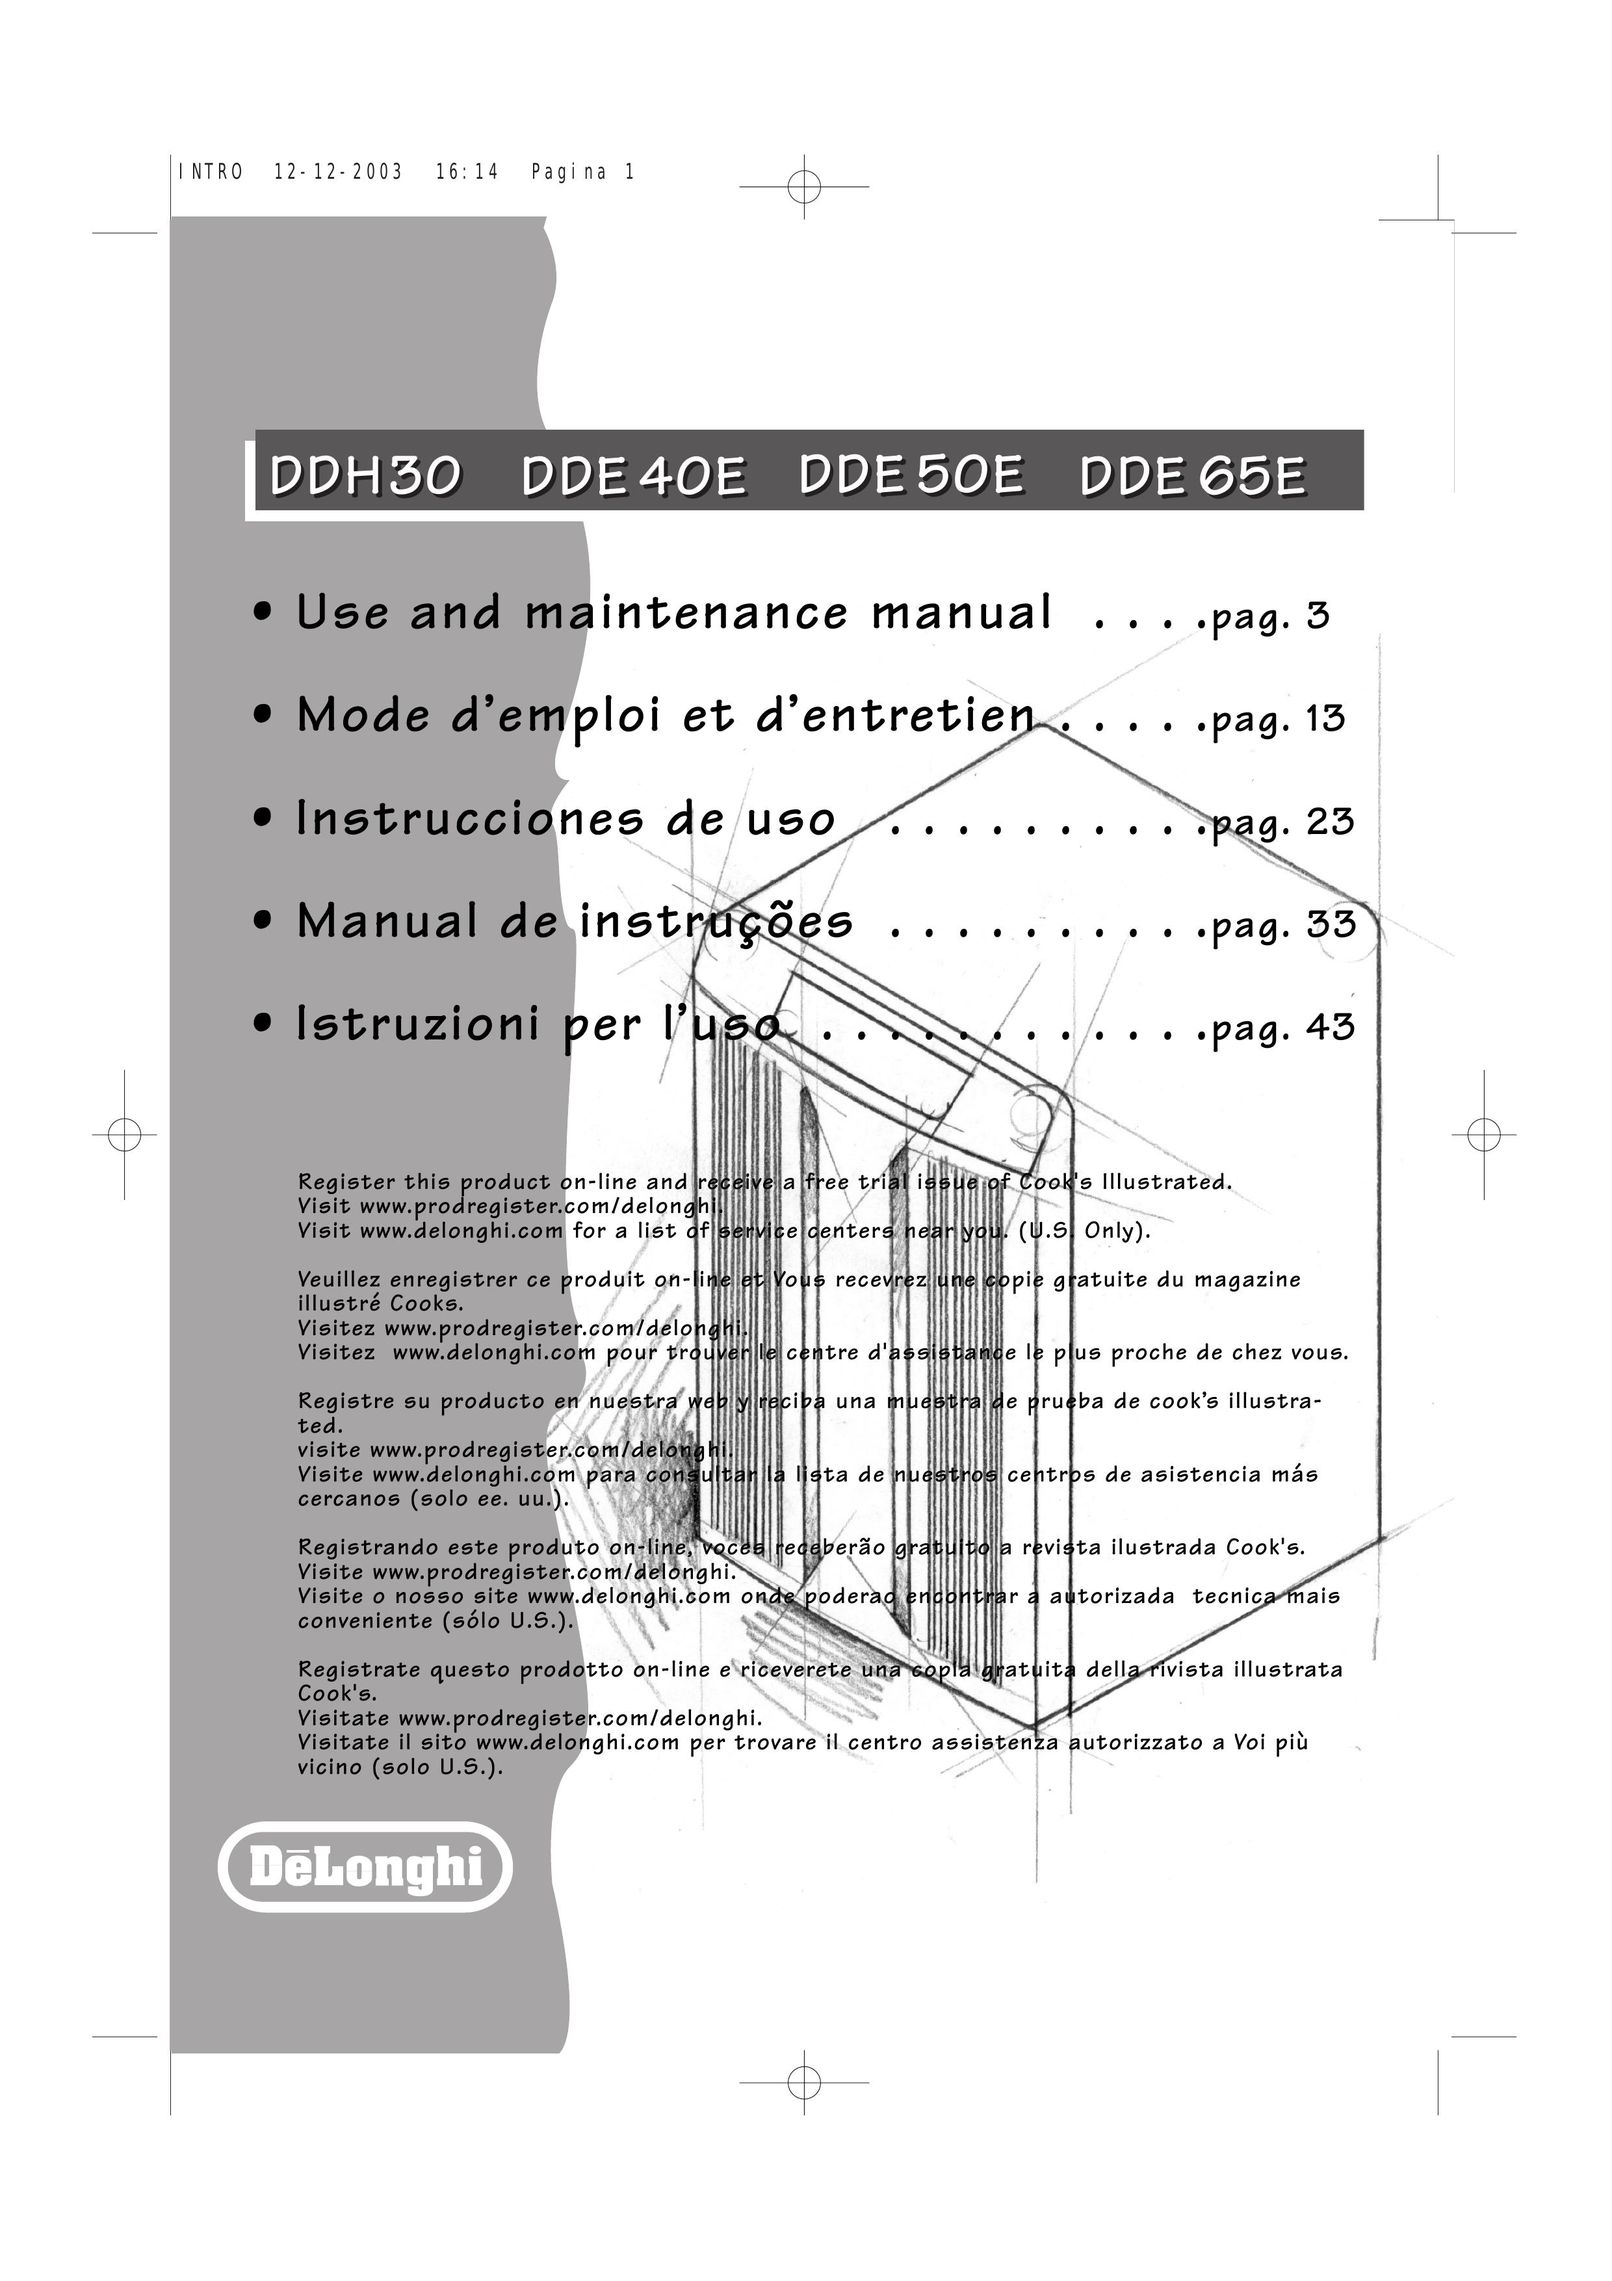 DeLonghi DDE 65EDDE Air Cleaner User Manual